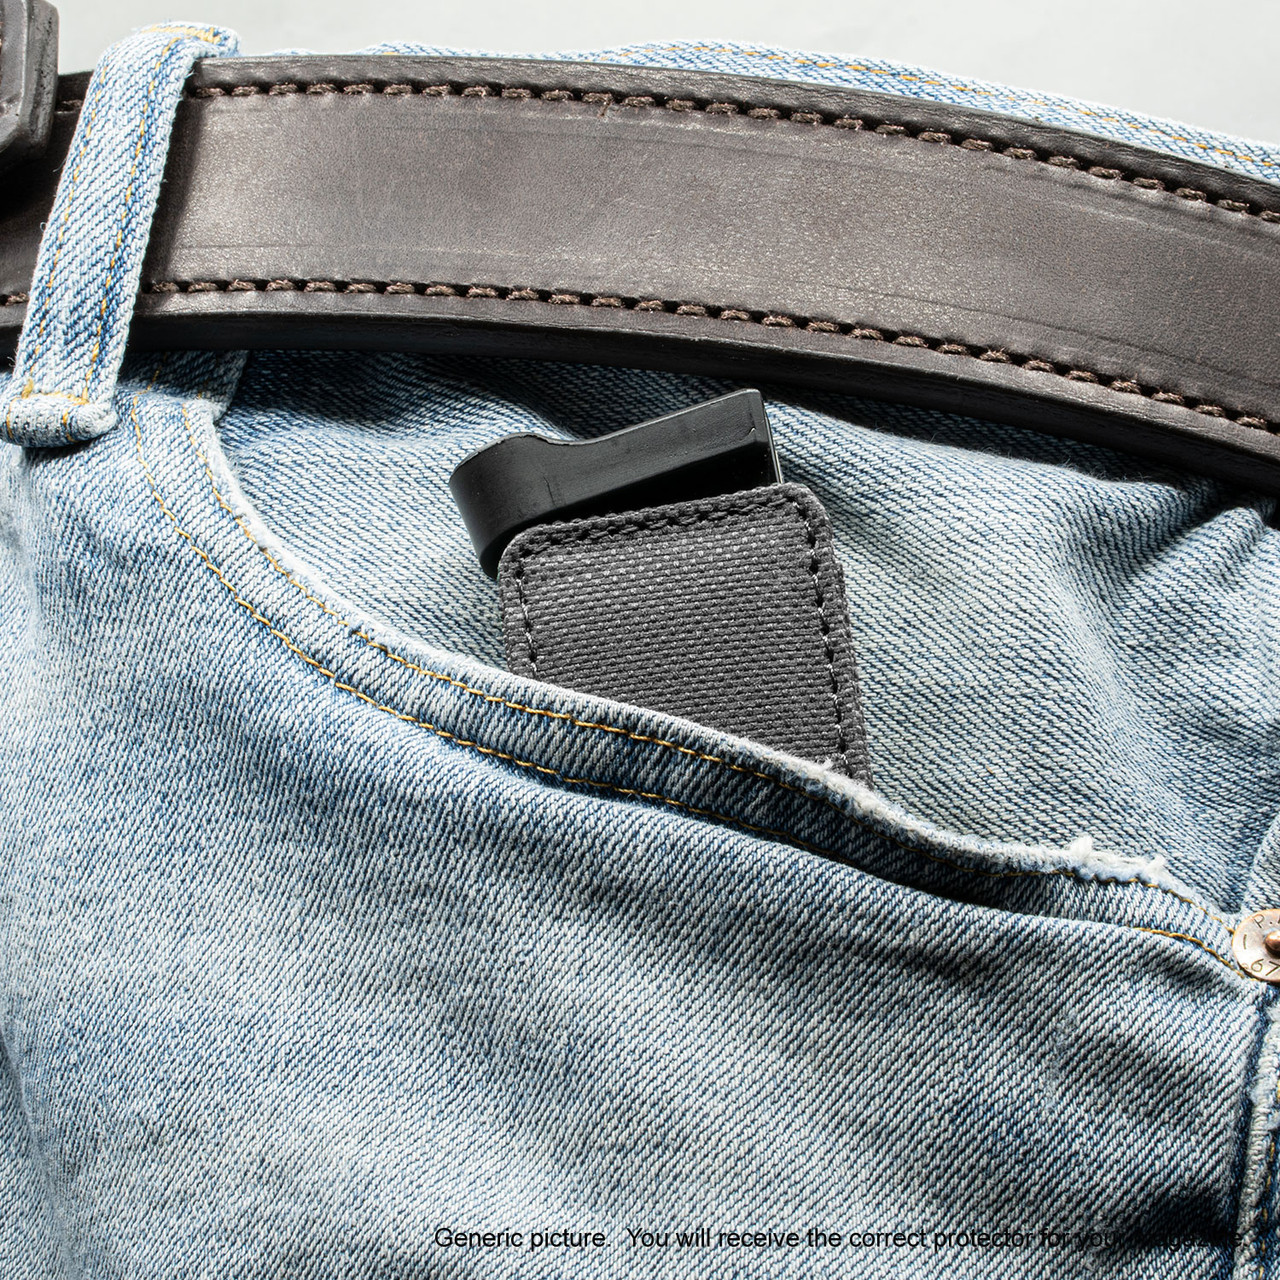 M&P Shield PLUS Grey Covert Magazine Pocket Protector